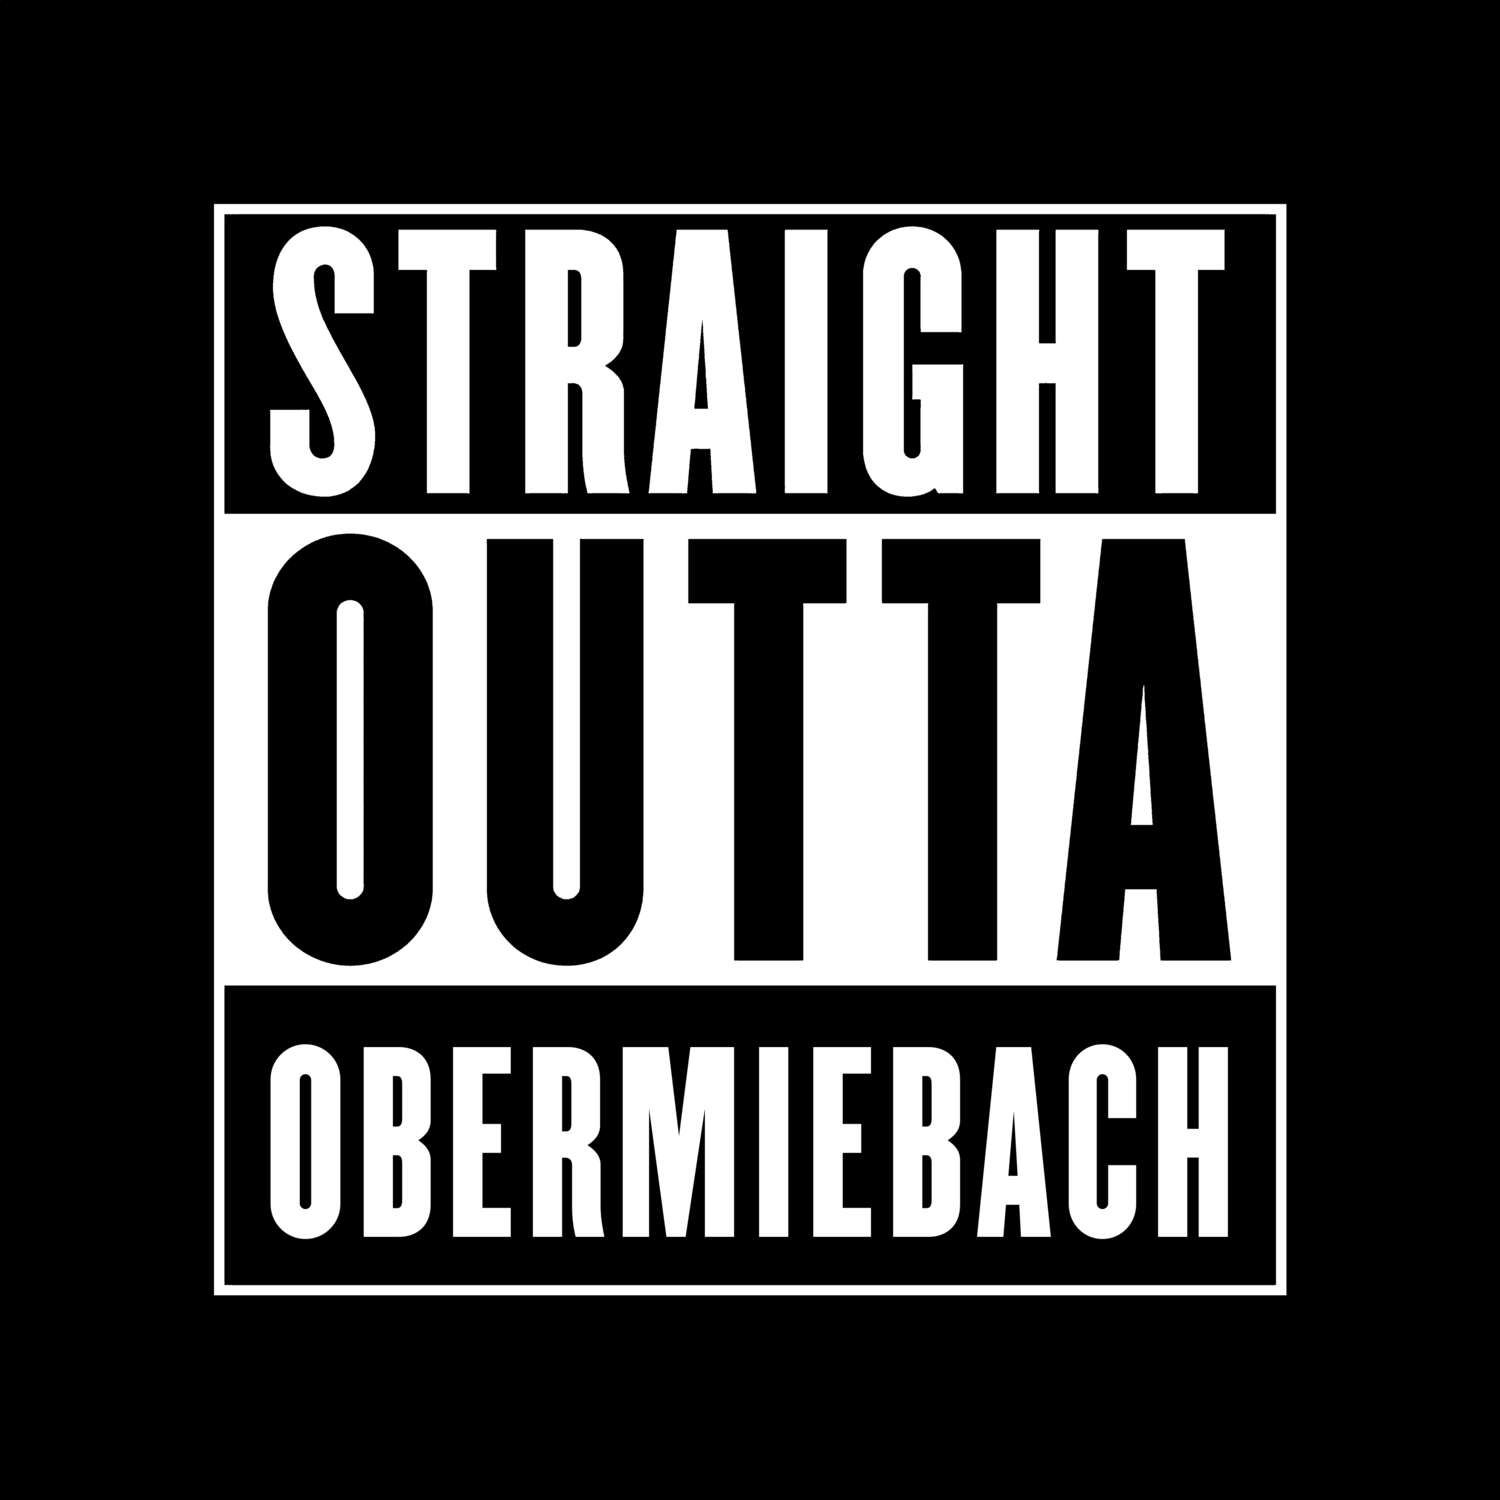 Obermiebach T-Shirt »Straight Outta«